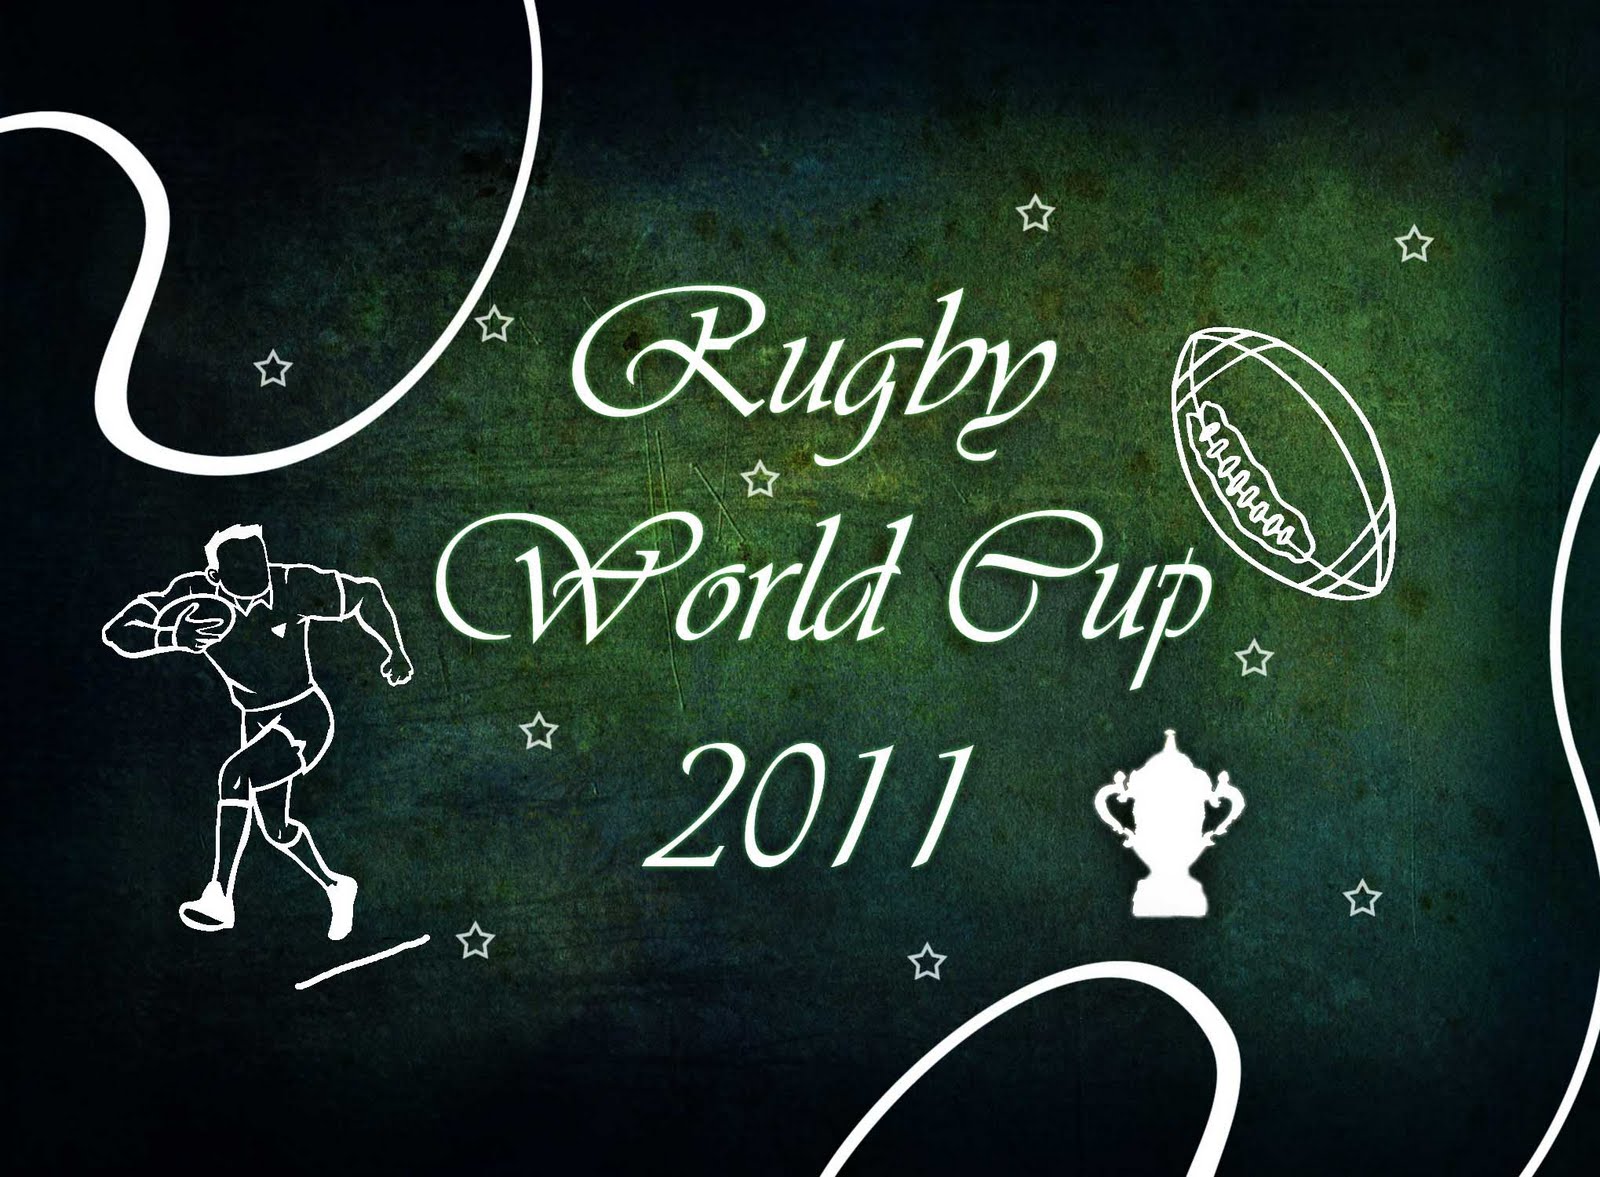 https://blogger.googleusercontent.com/img/b/R29vZ2xl/AVvXsEghMoJDHvilcxQ6ltaAiF9R8hjmy-srlEZwFqGKxwIPso85BmY4DtiDUSITWkVkSdba43LRTN90L1fW9TtFUooVMM0BFcMOQ7VaT1jjx1BM2iDNWzw8SAVtaWOHtWaFFJoDWr8ur7GCbV_w/s1600/rugby_world_cup_2011.jpg